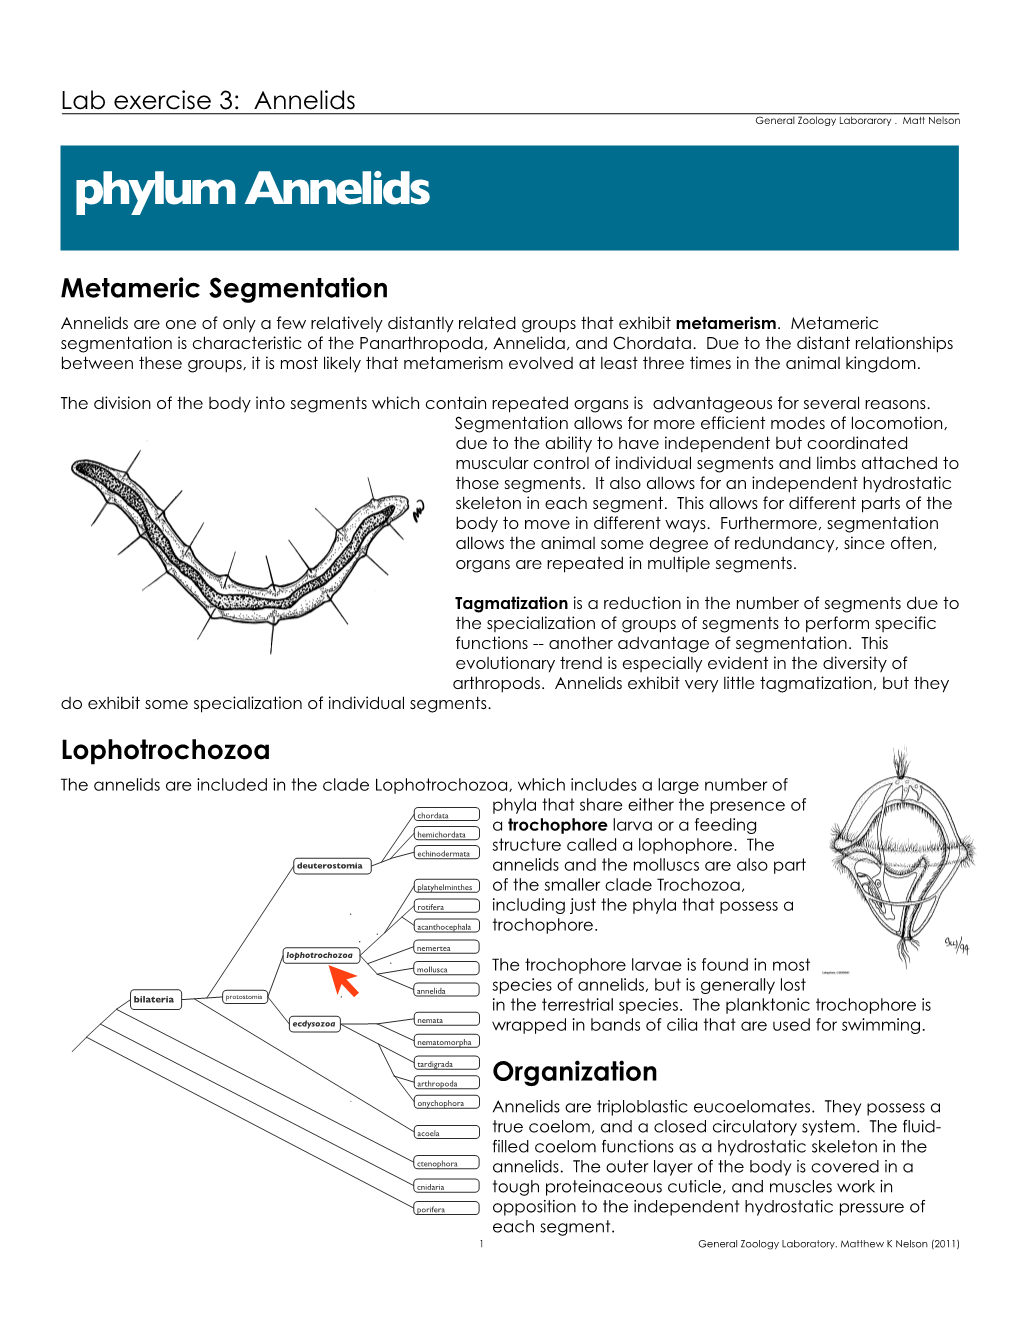 Phylum Annelids